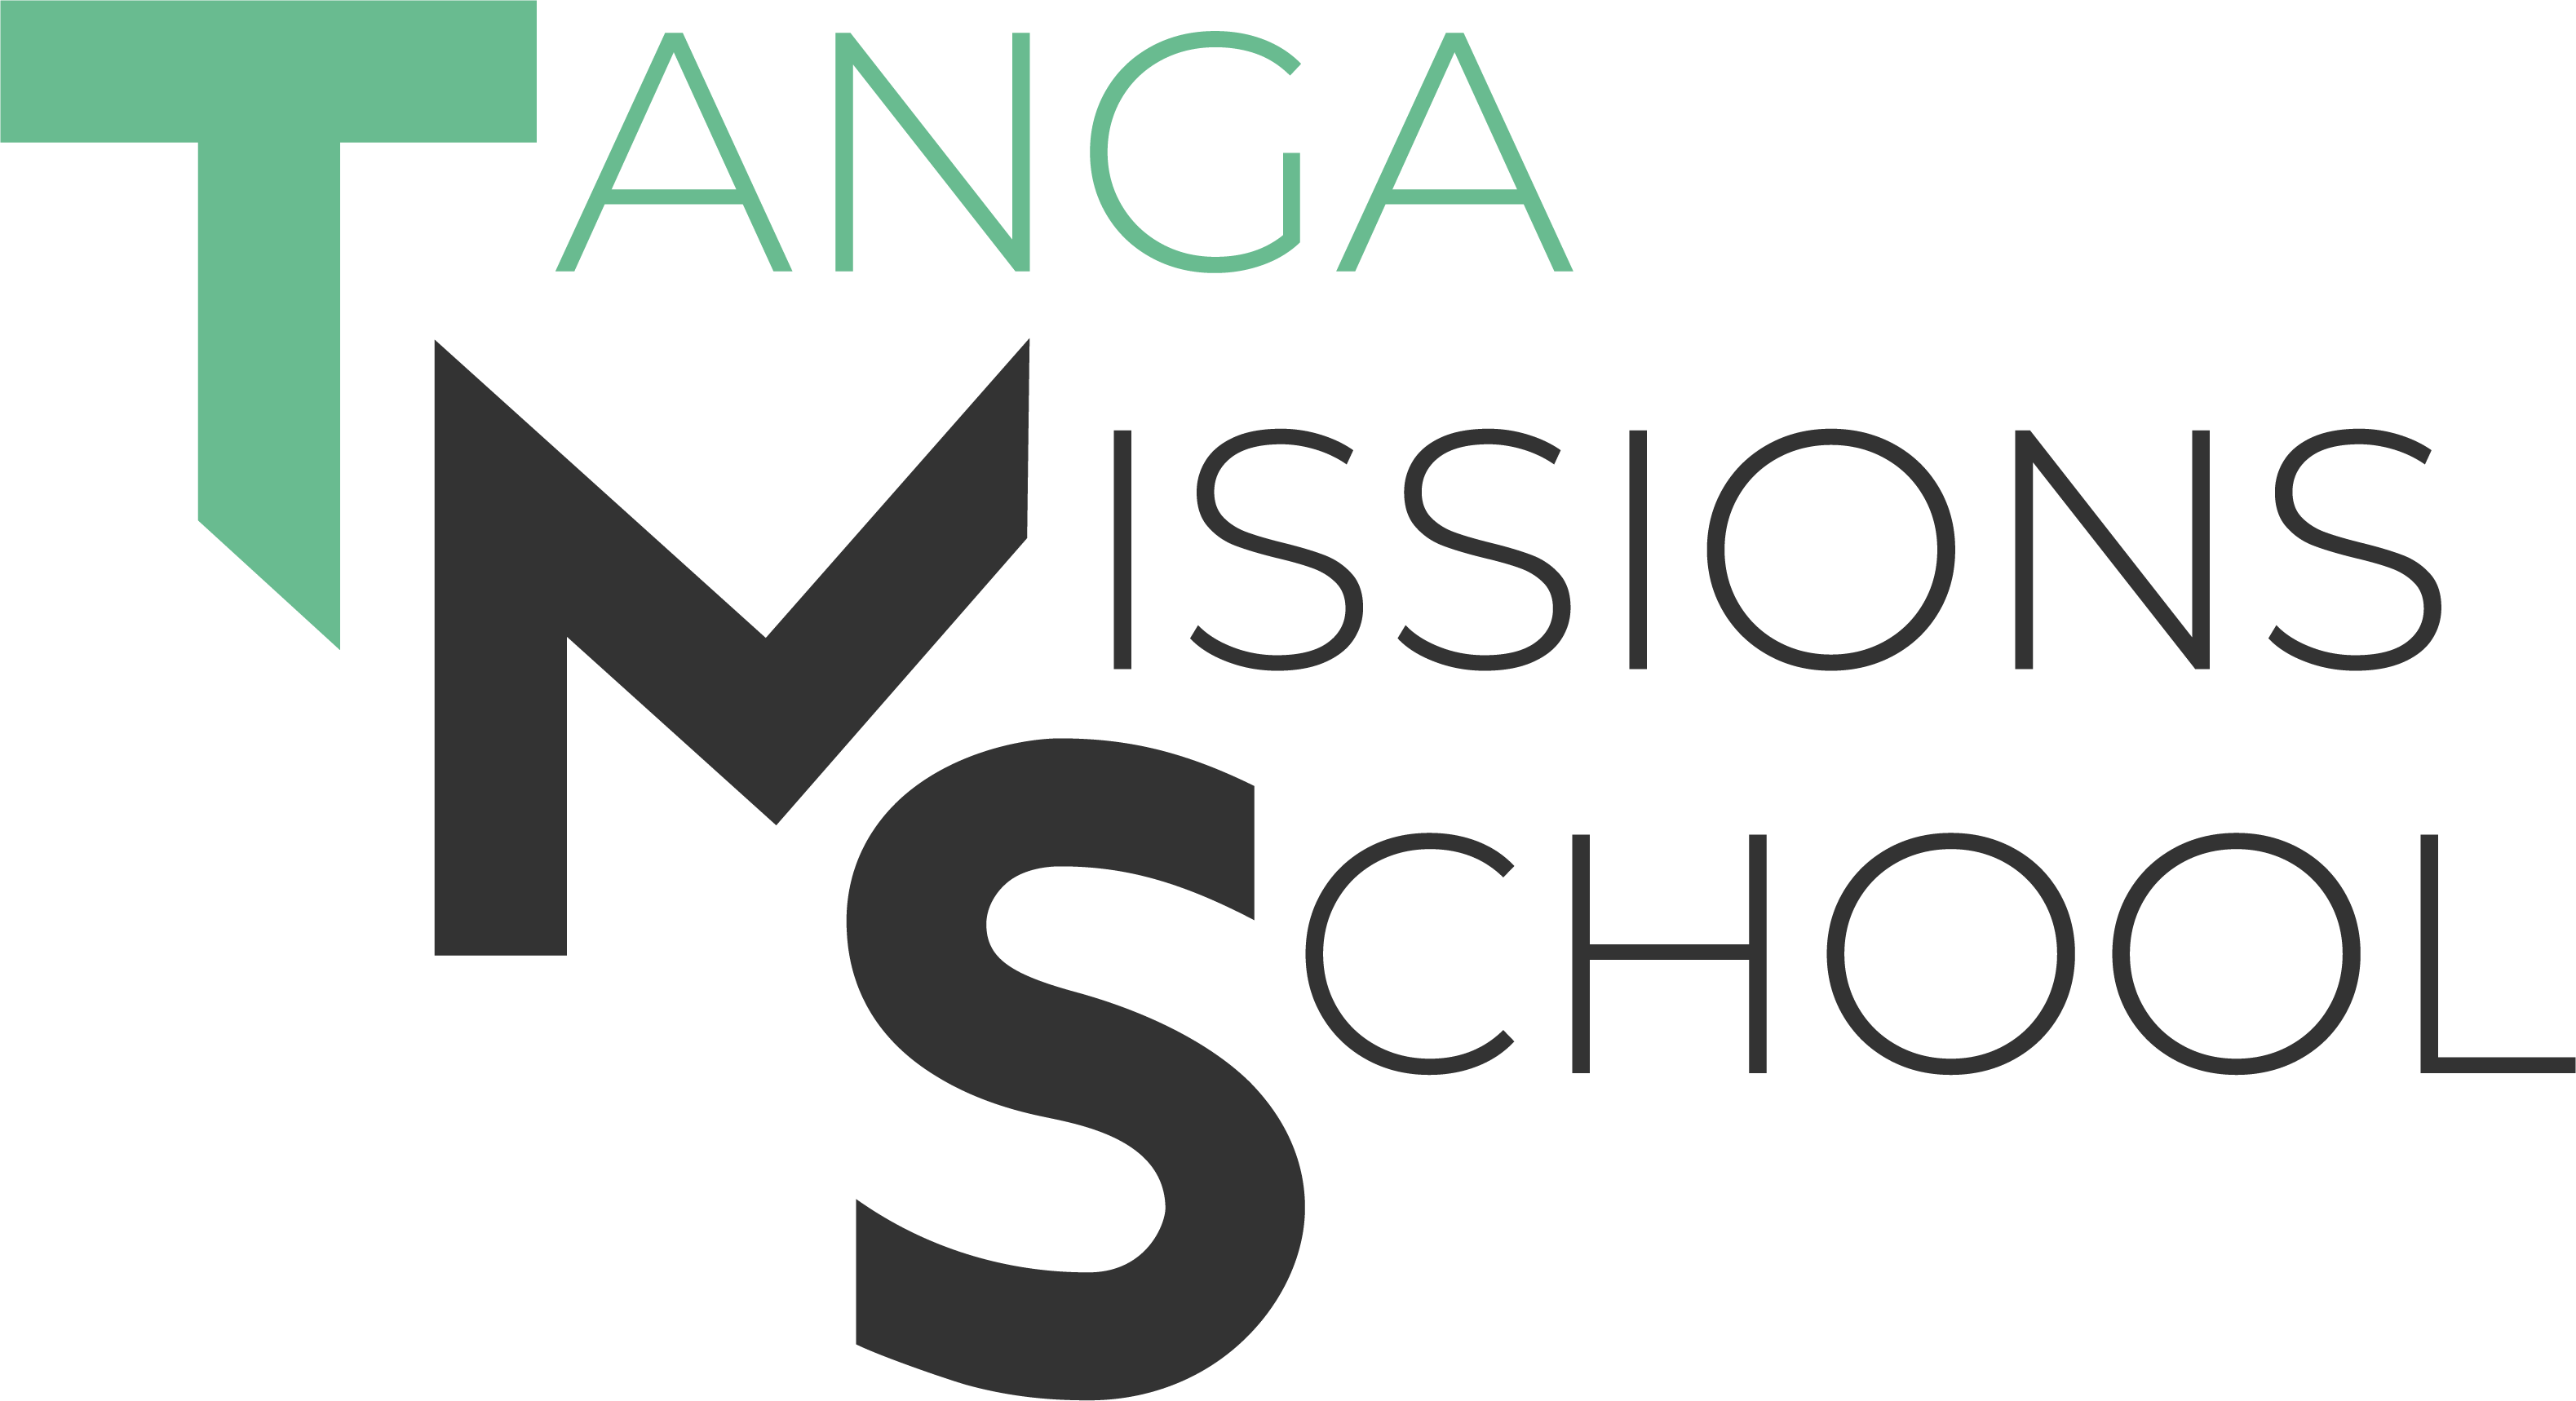 Tanga Missions School logo